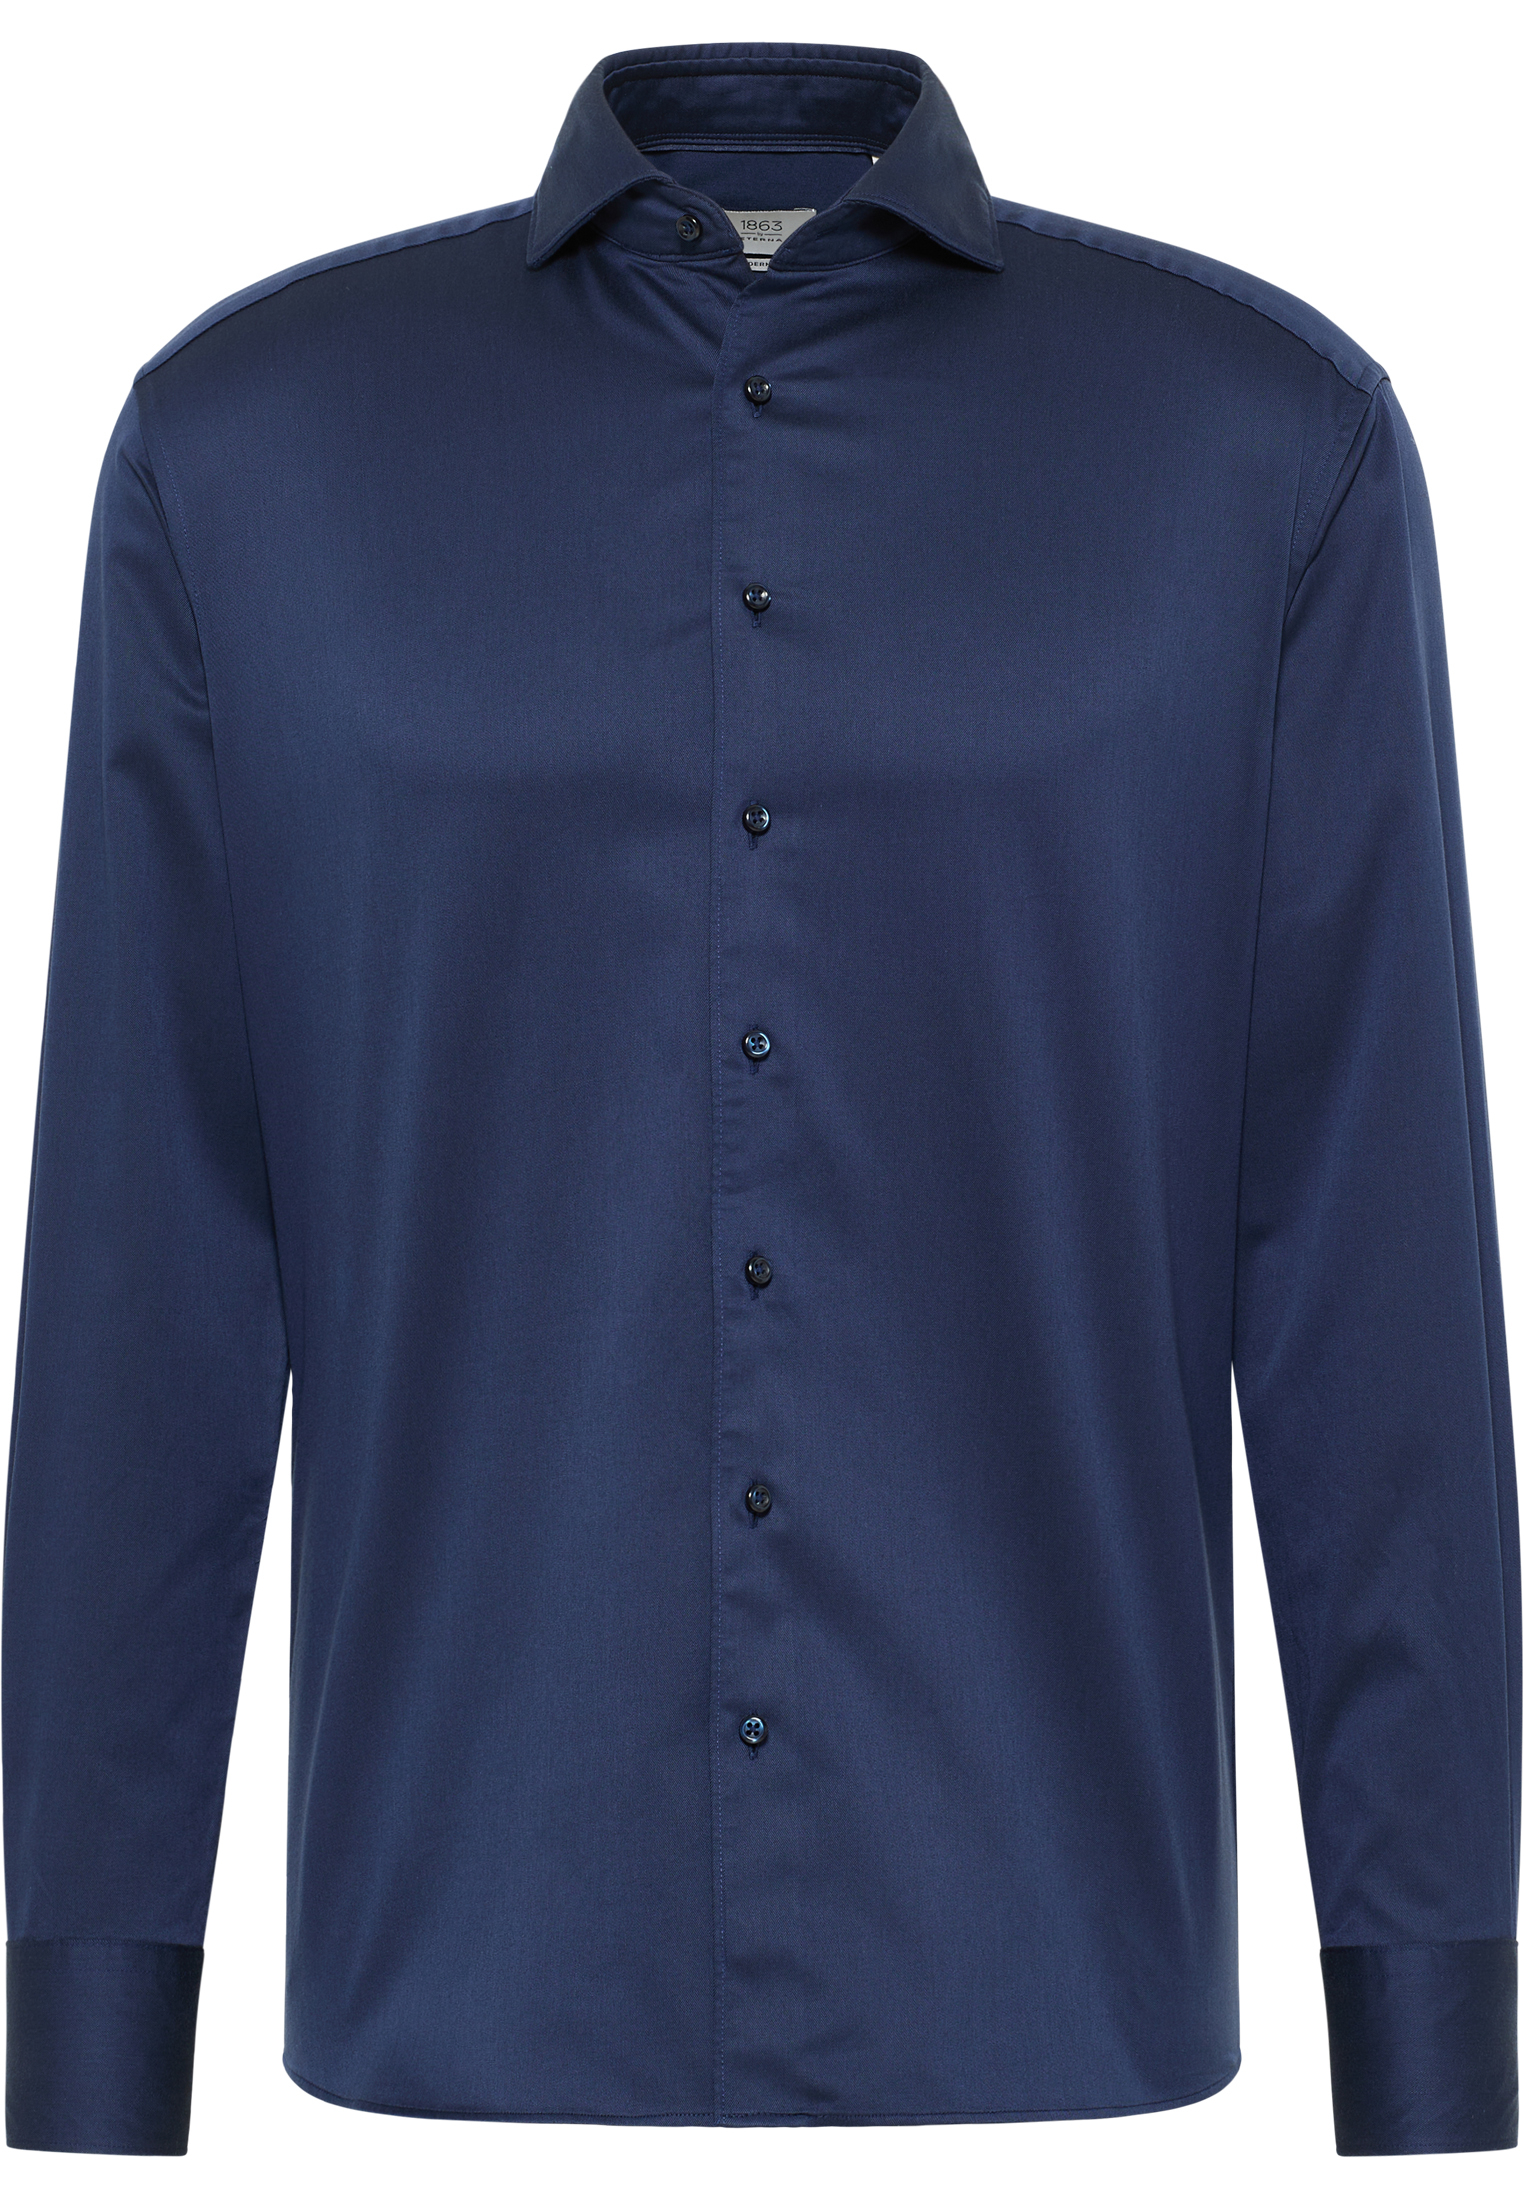 MODERN FIT Soft Luxury Shirt Bleu marine uni